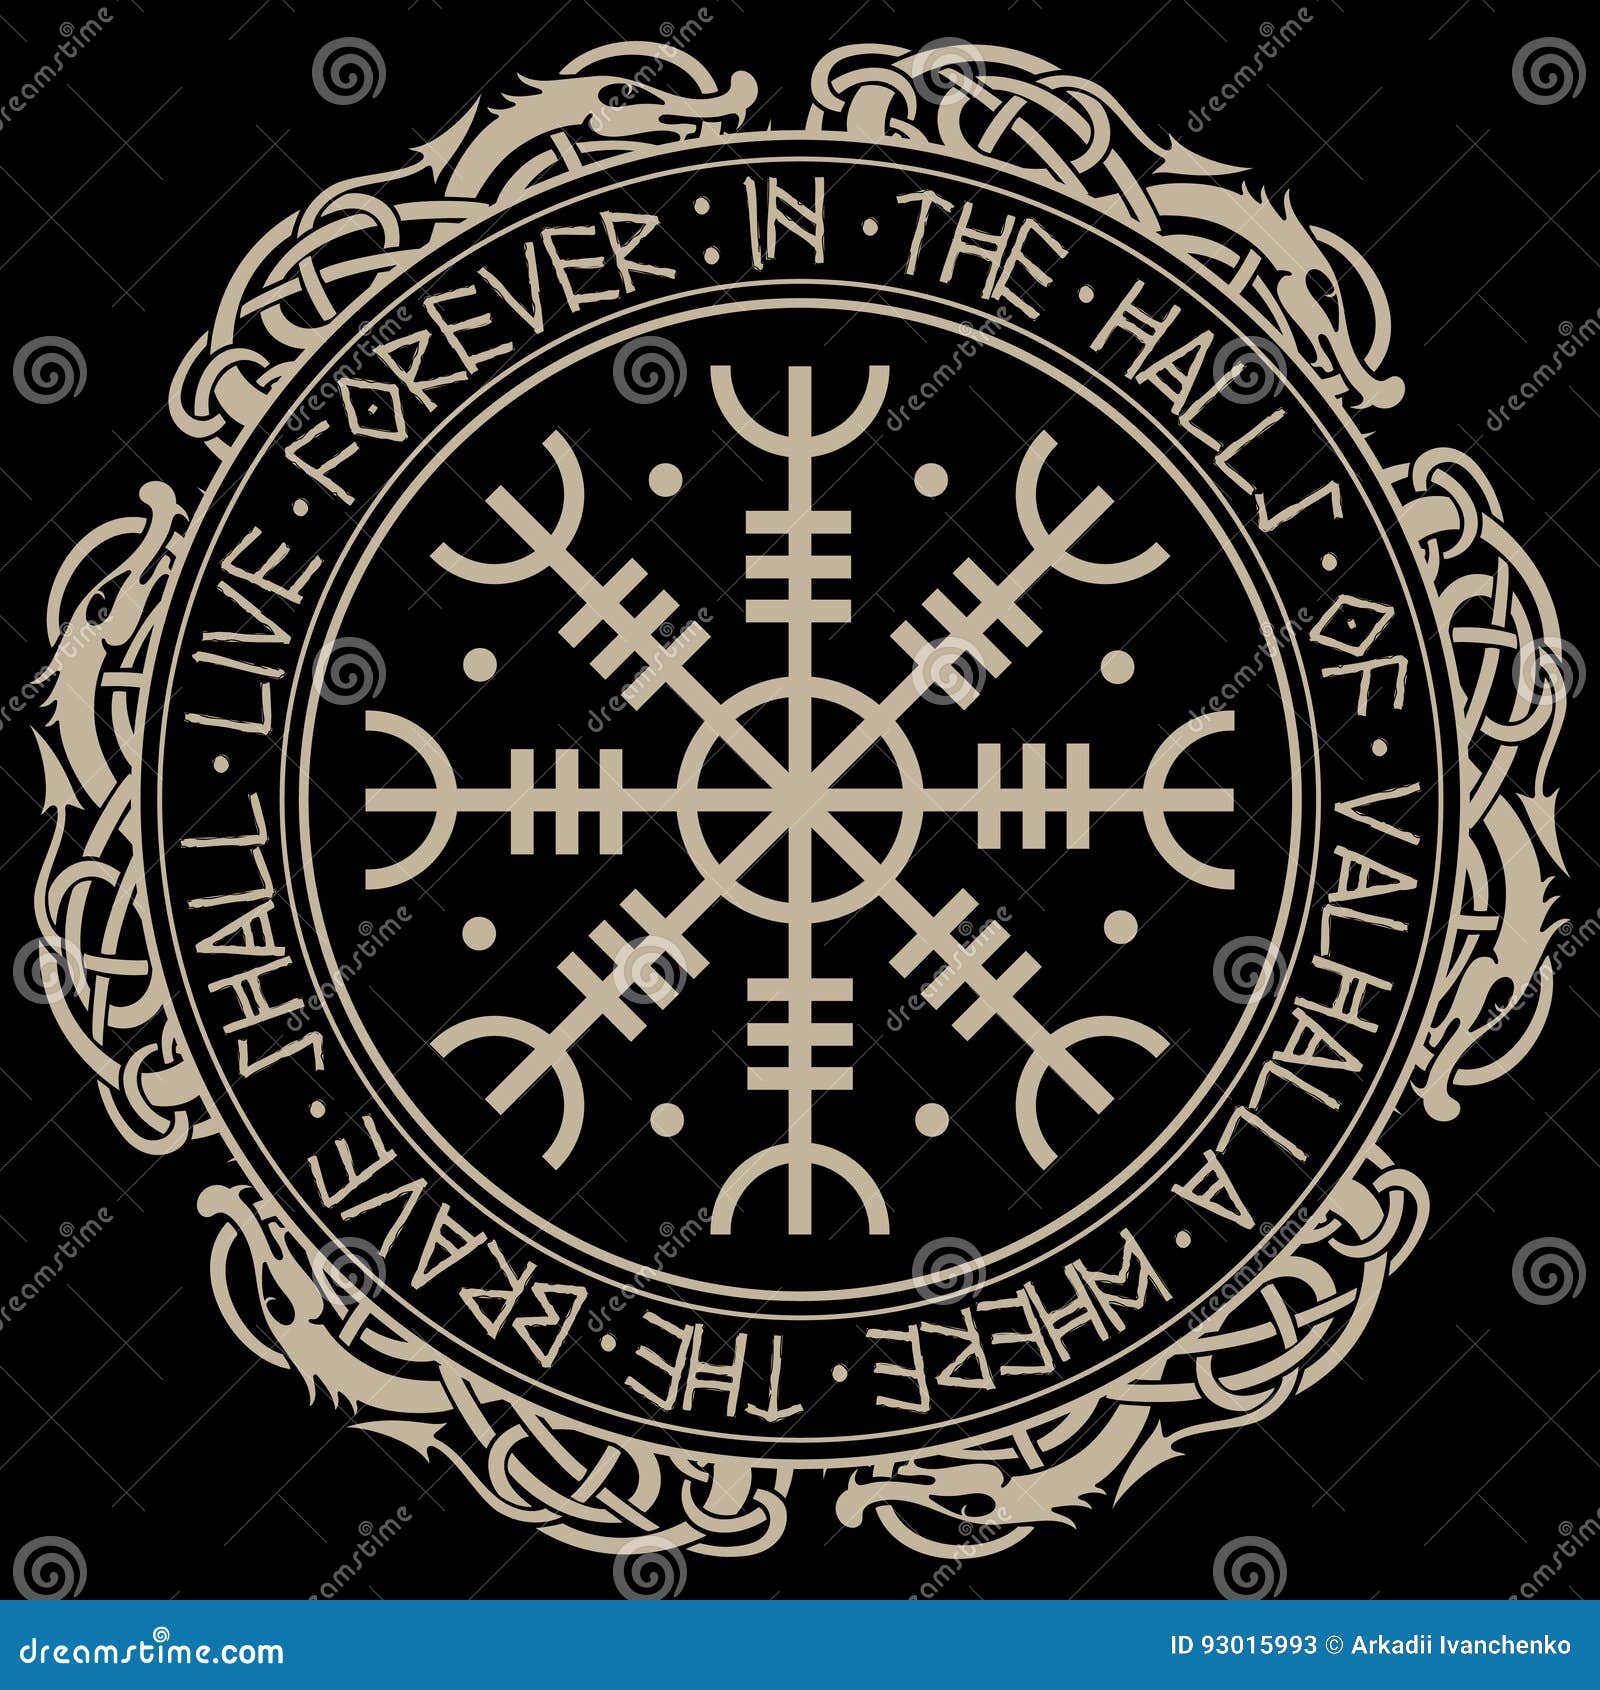 aegishjalmur, helm of awe helm of terror , icelandic magical staves with scandinavian runes and dragons